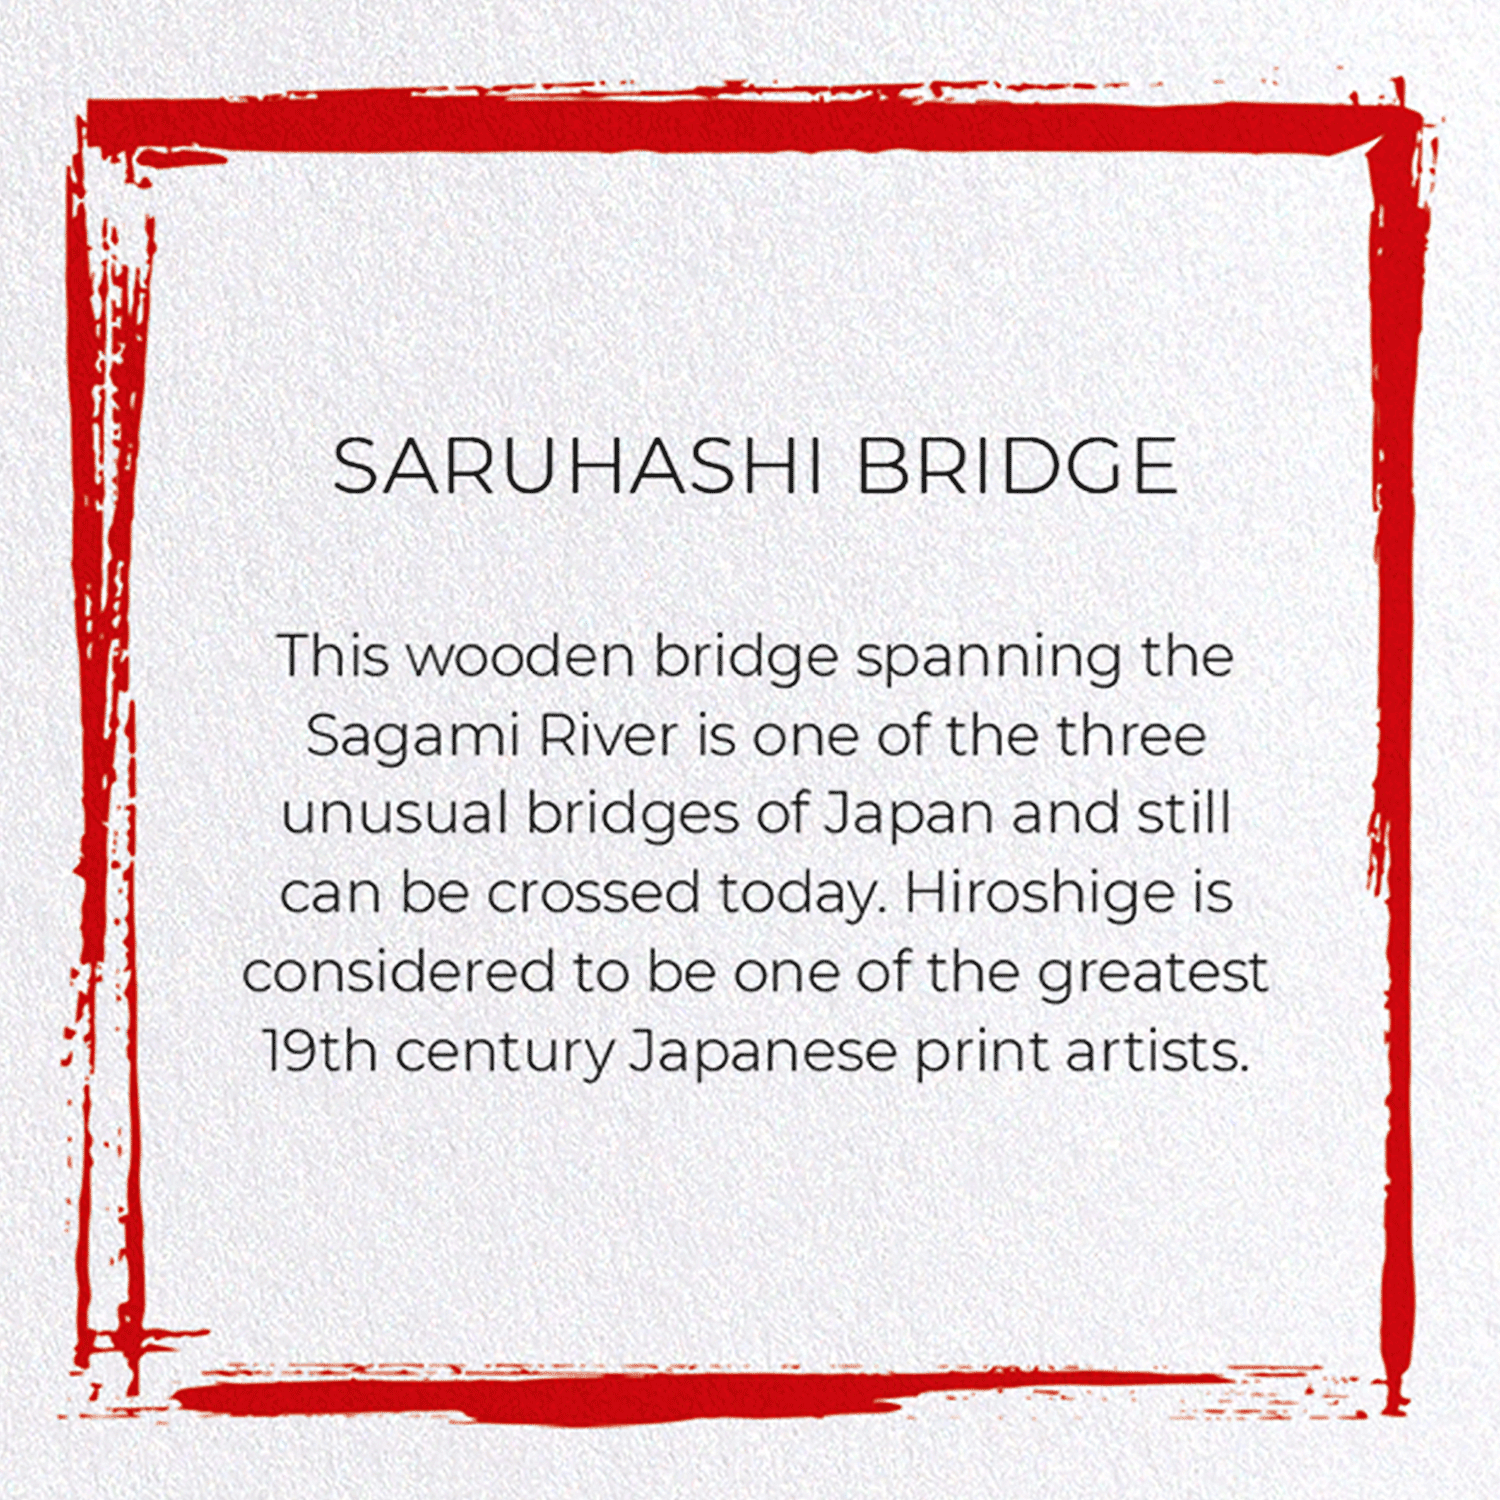 SARUHASHI BRIDGE